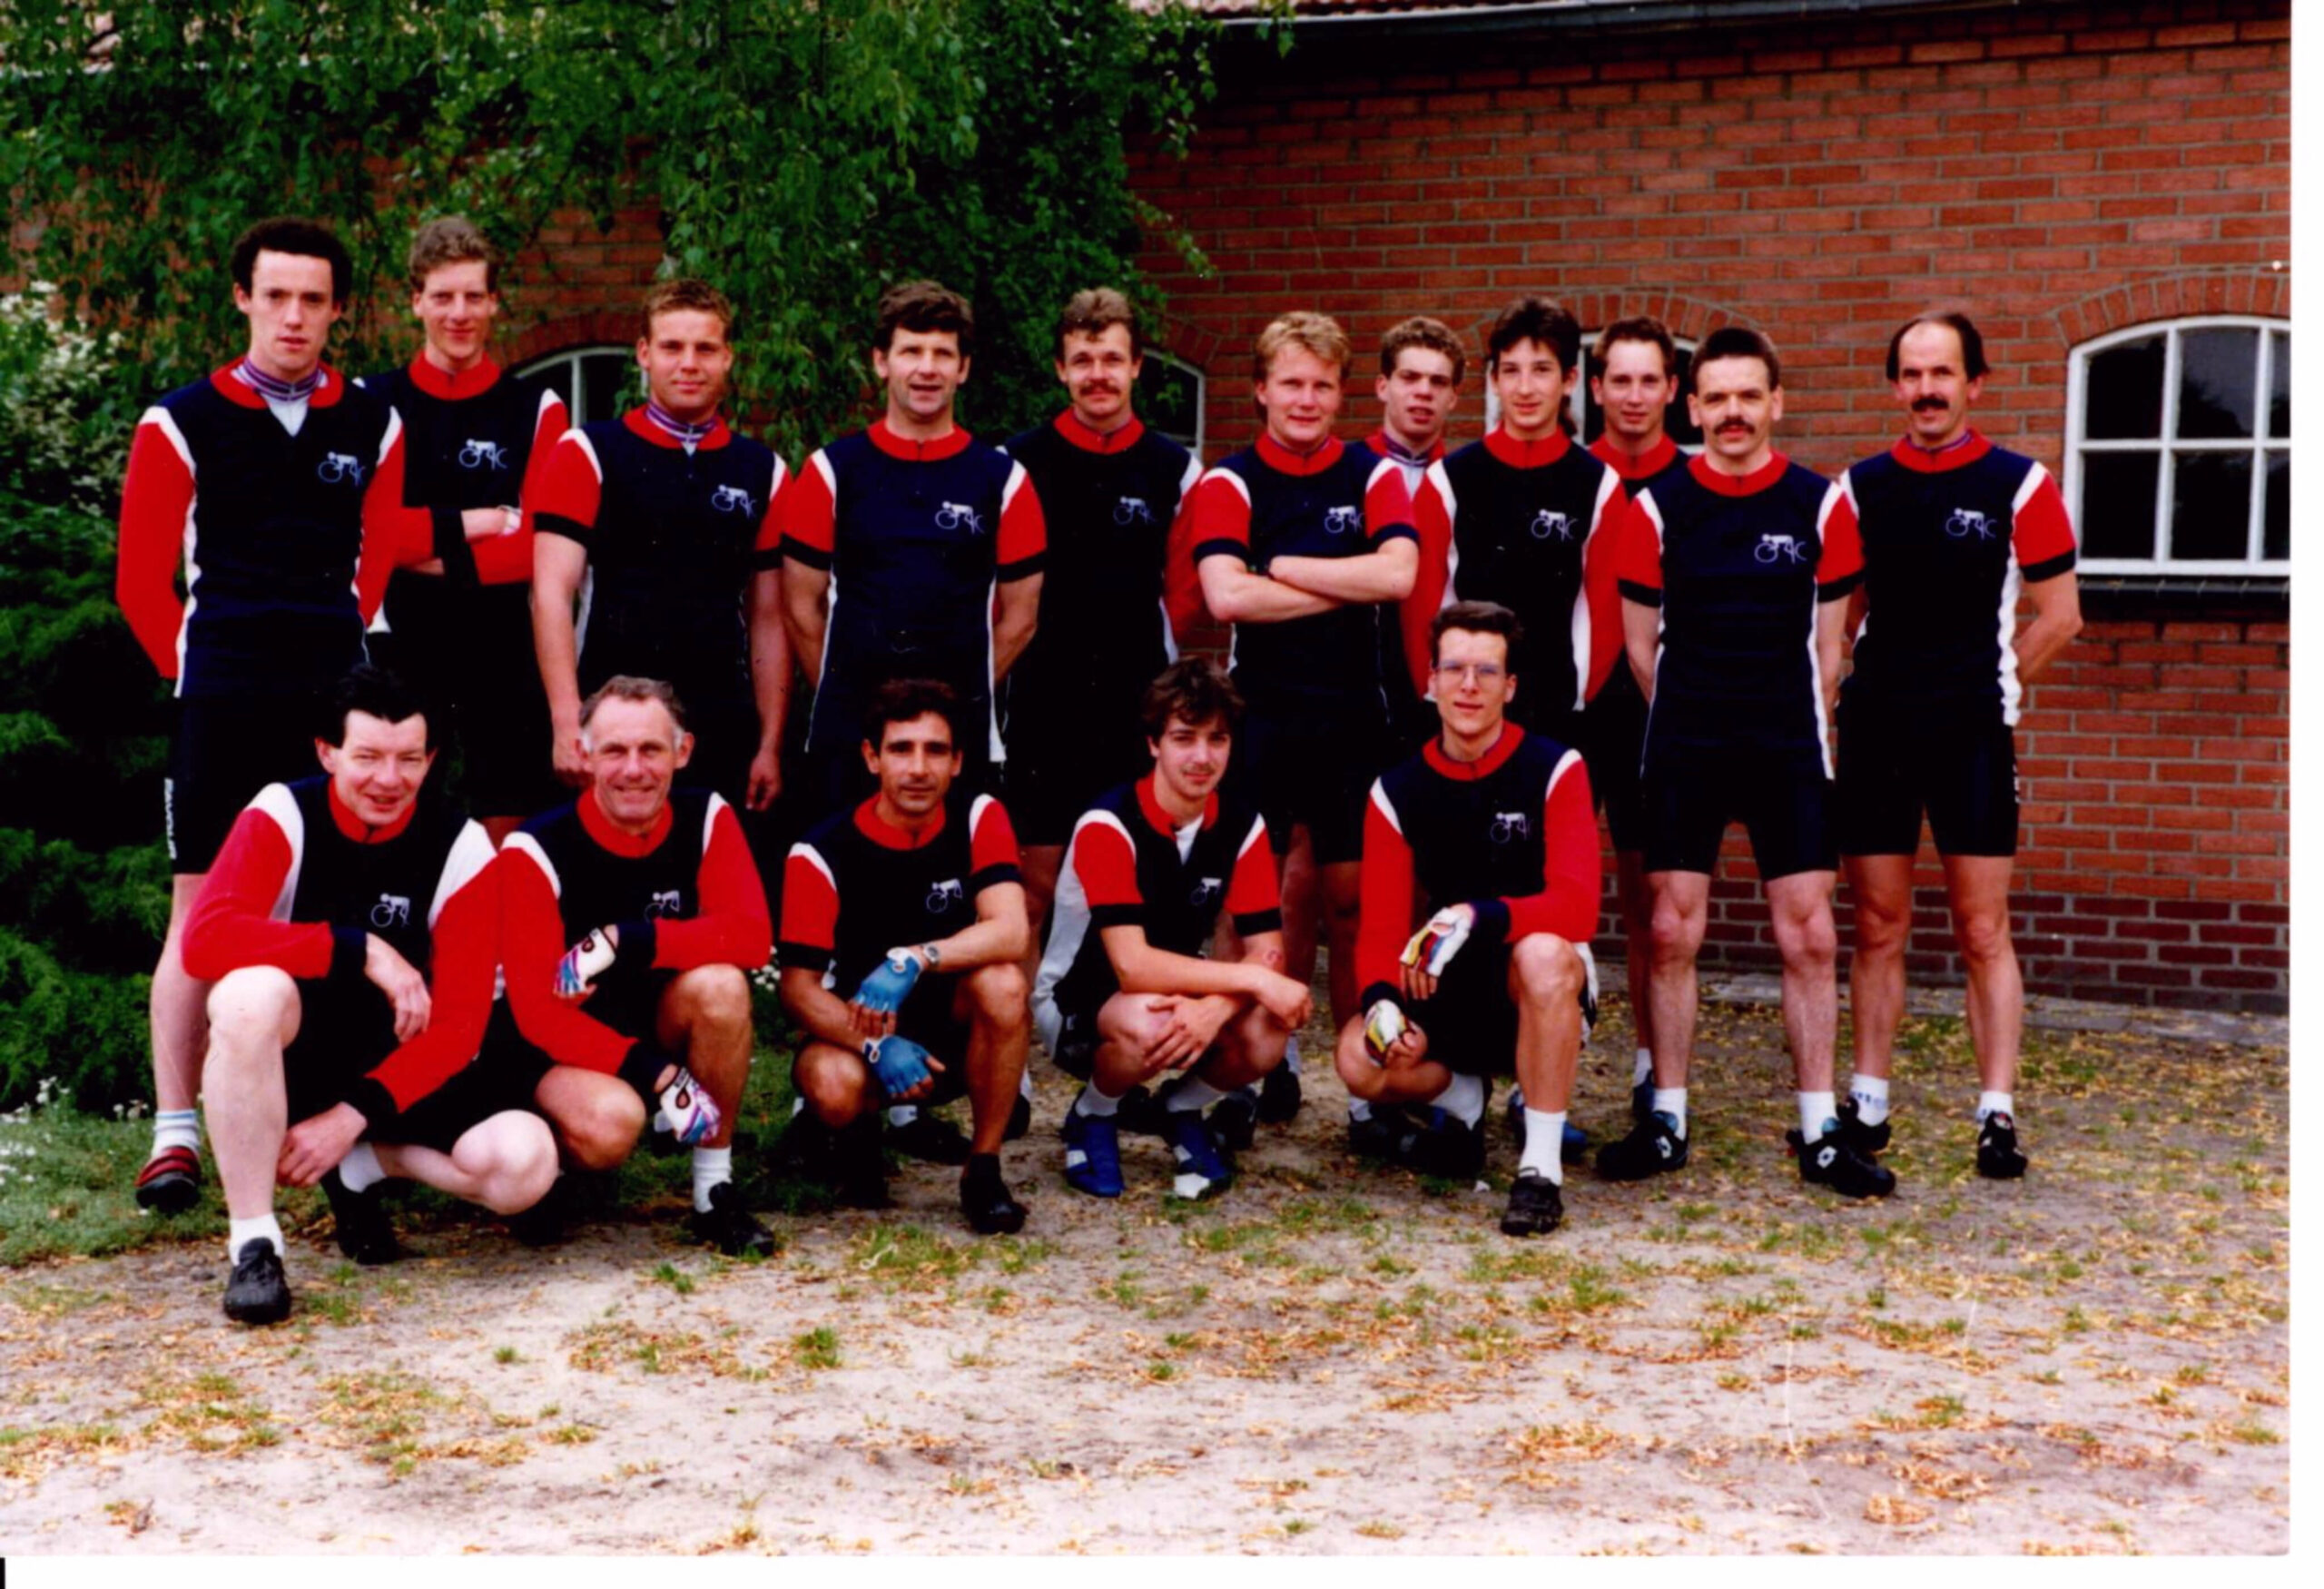 Groepsfoto zo rond 1990